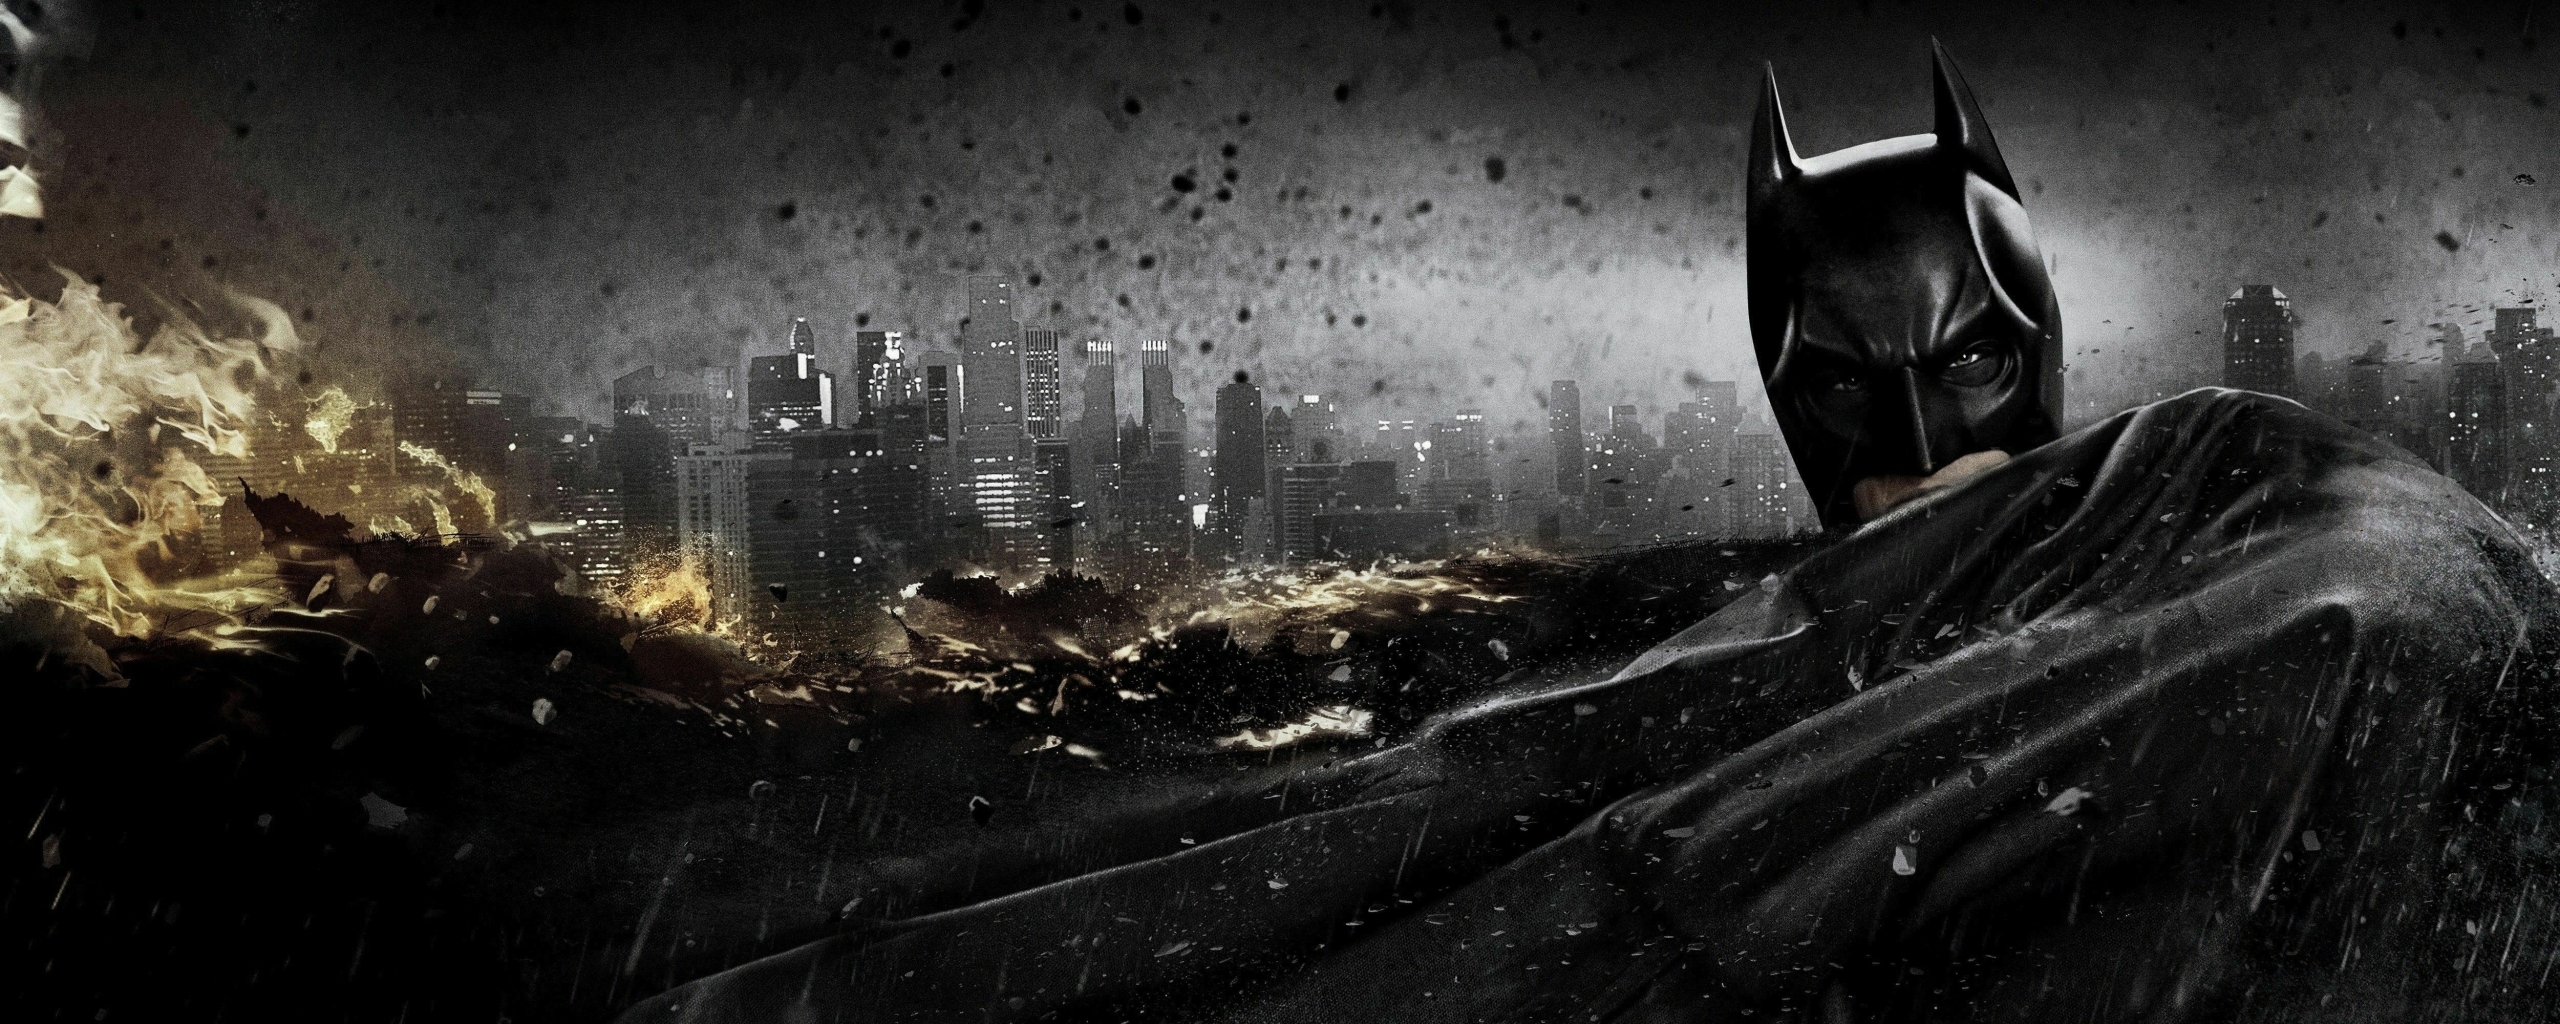 Batman The Dark Knight iPhone Wallpapers Free Download